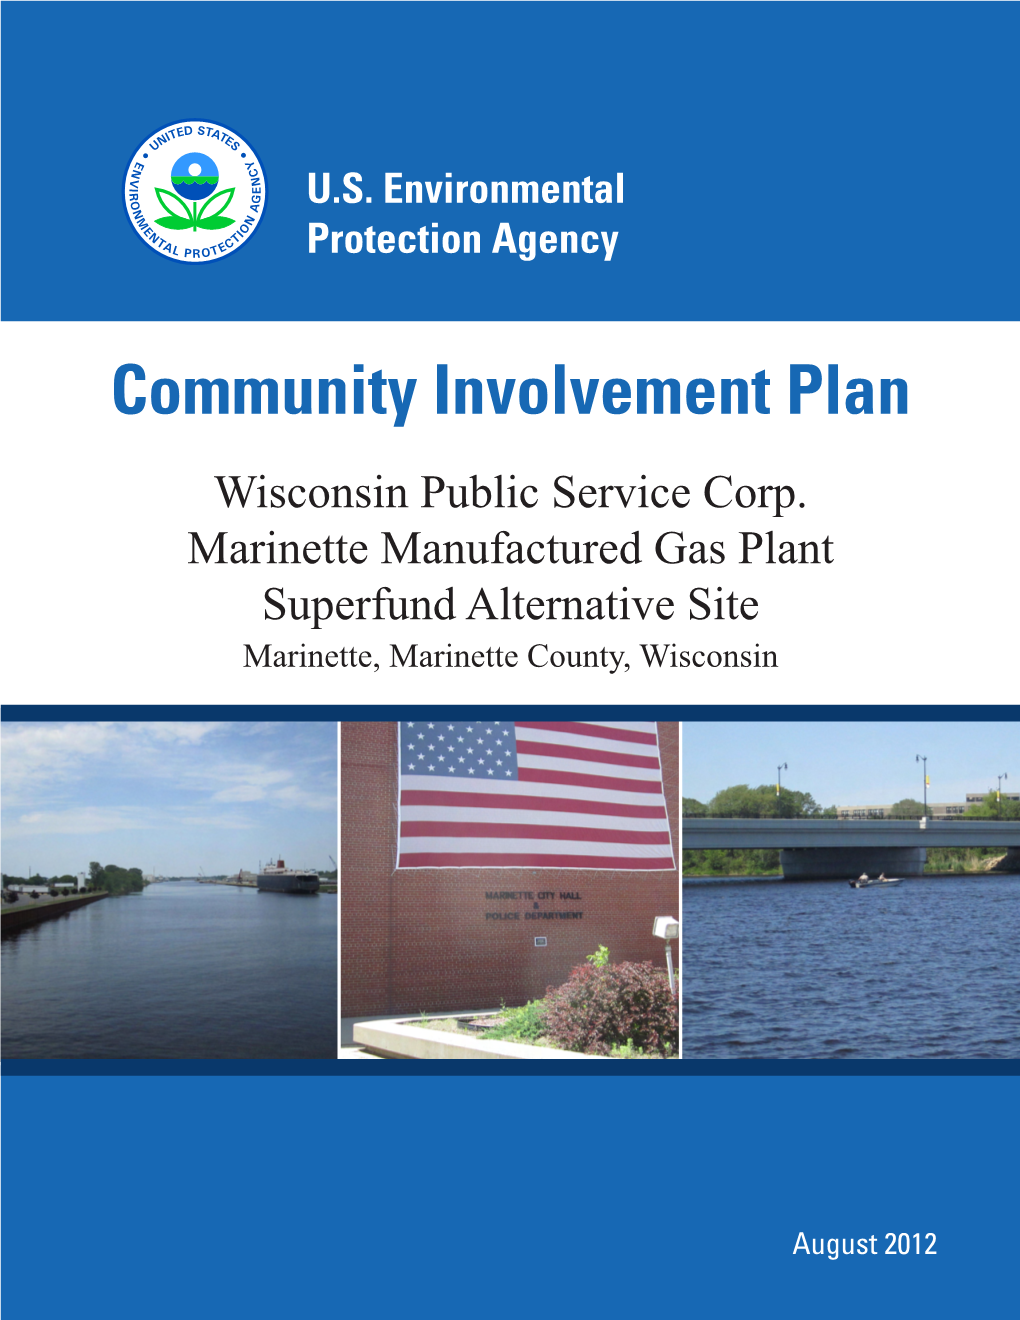 EPA’S Community Involvement Goals for the WPSC Marinette MGP Site